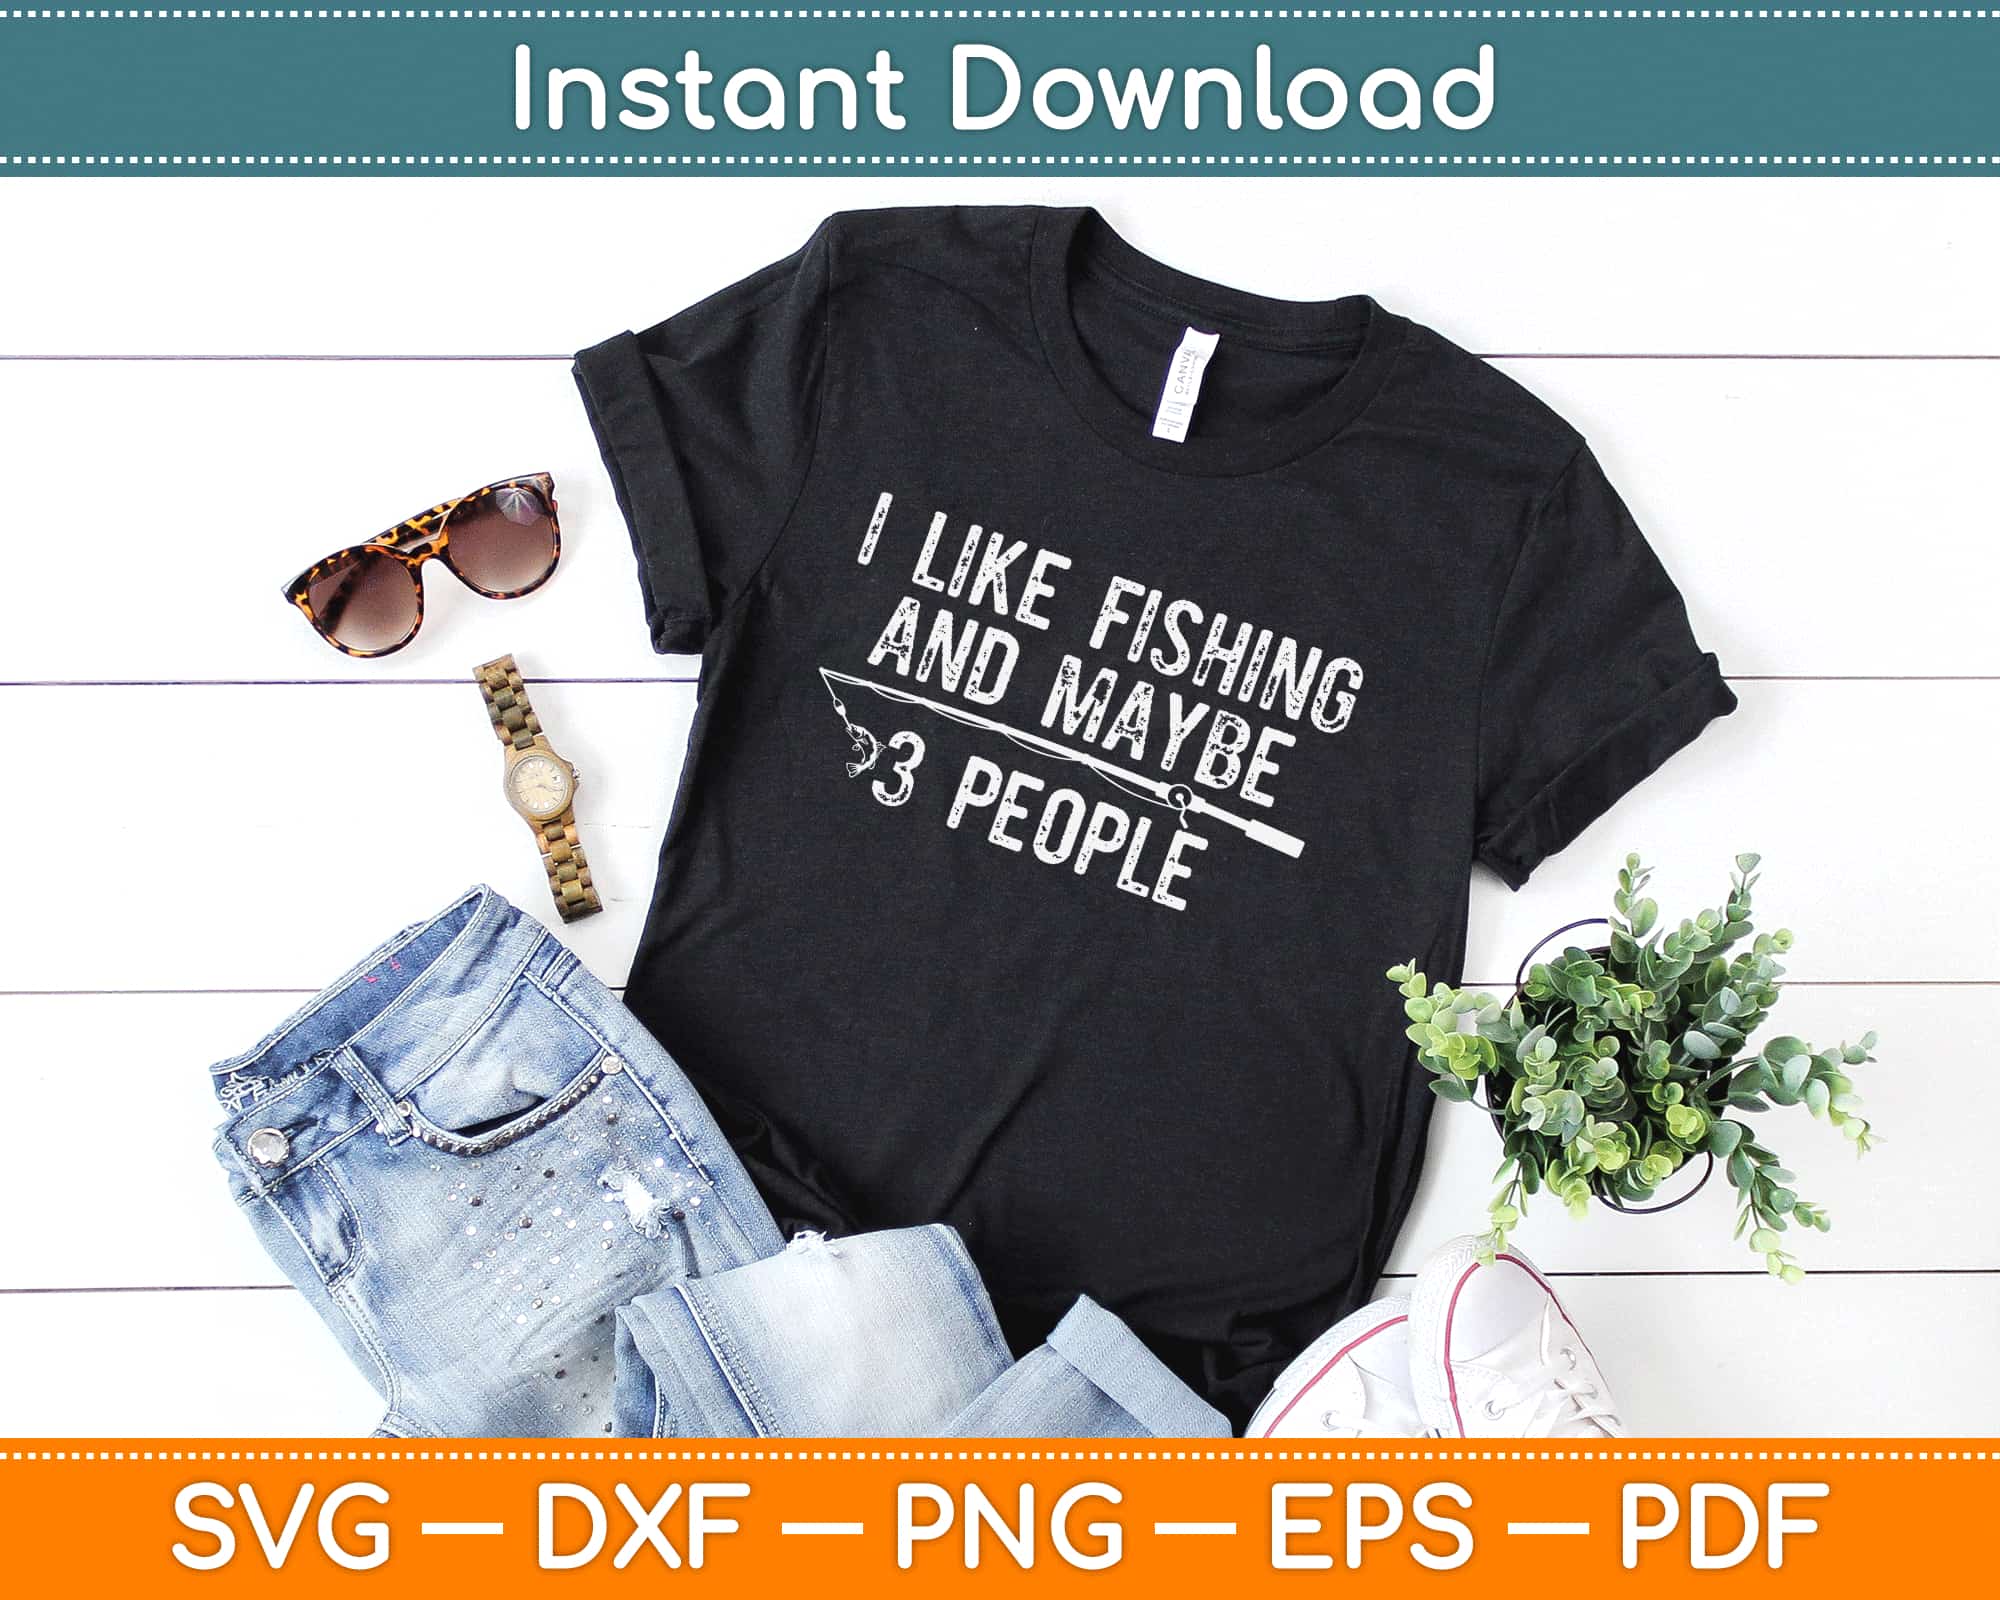 I Like Fishing And Maybe 3 People Svg Digital Download – artprintfile